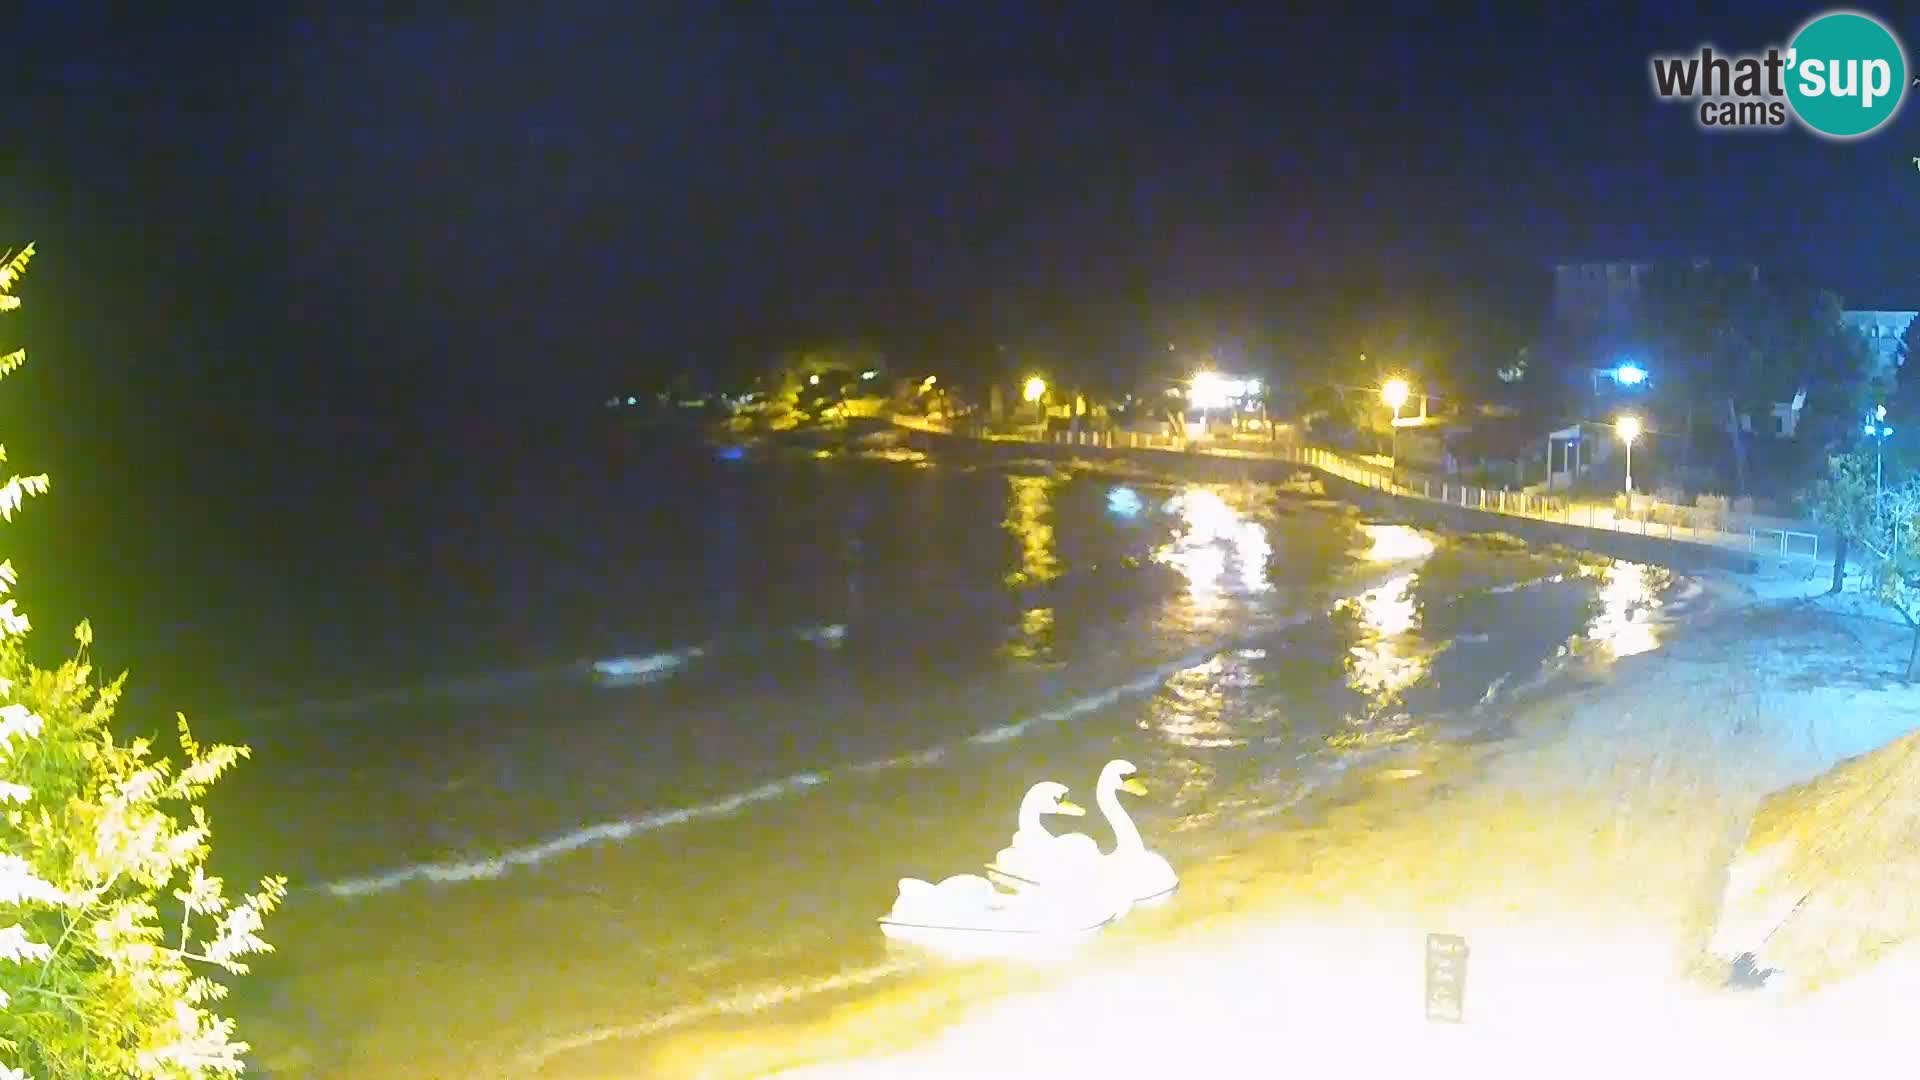 Plaža Slanica Murter – kamera v živo